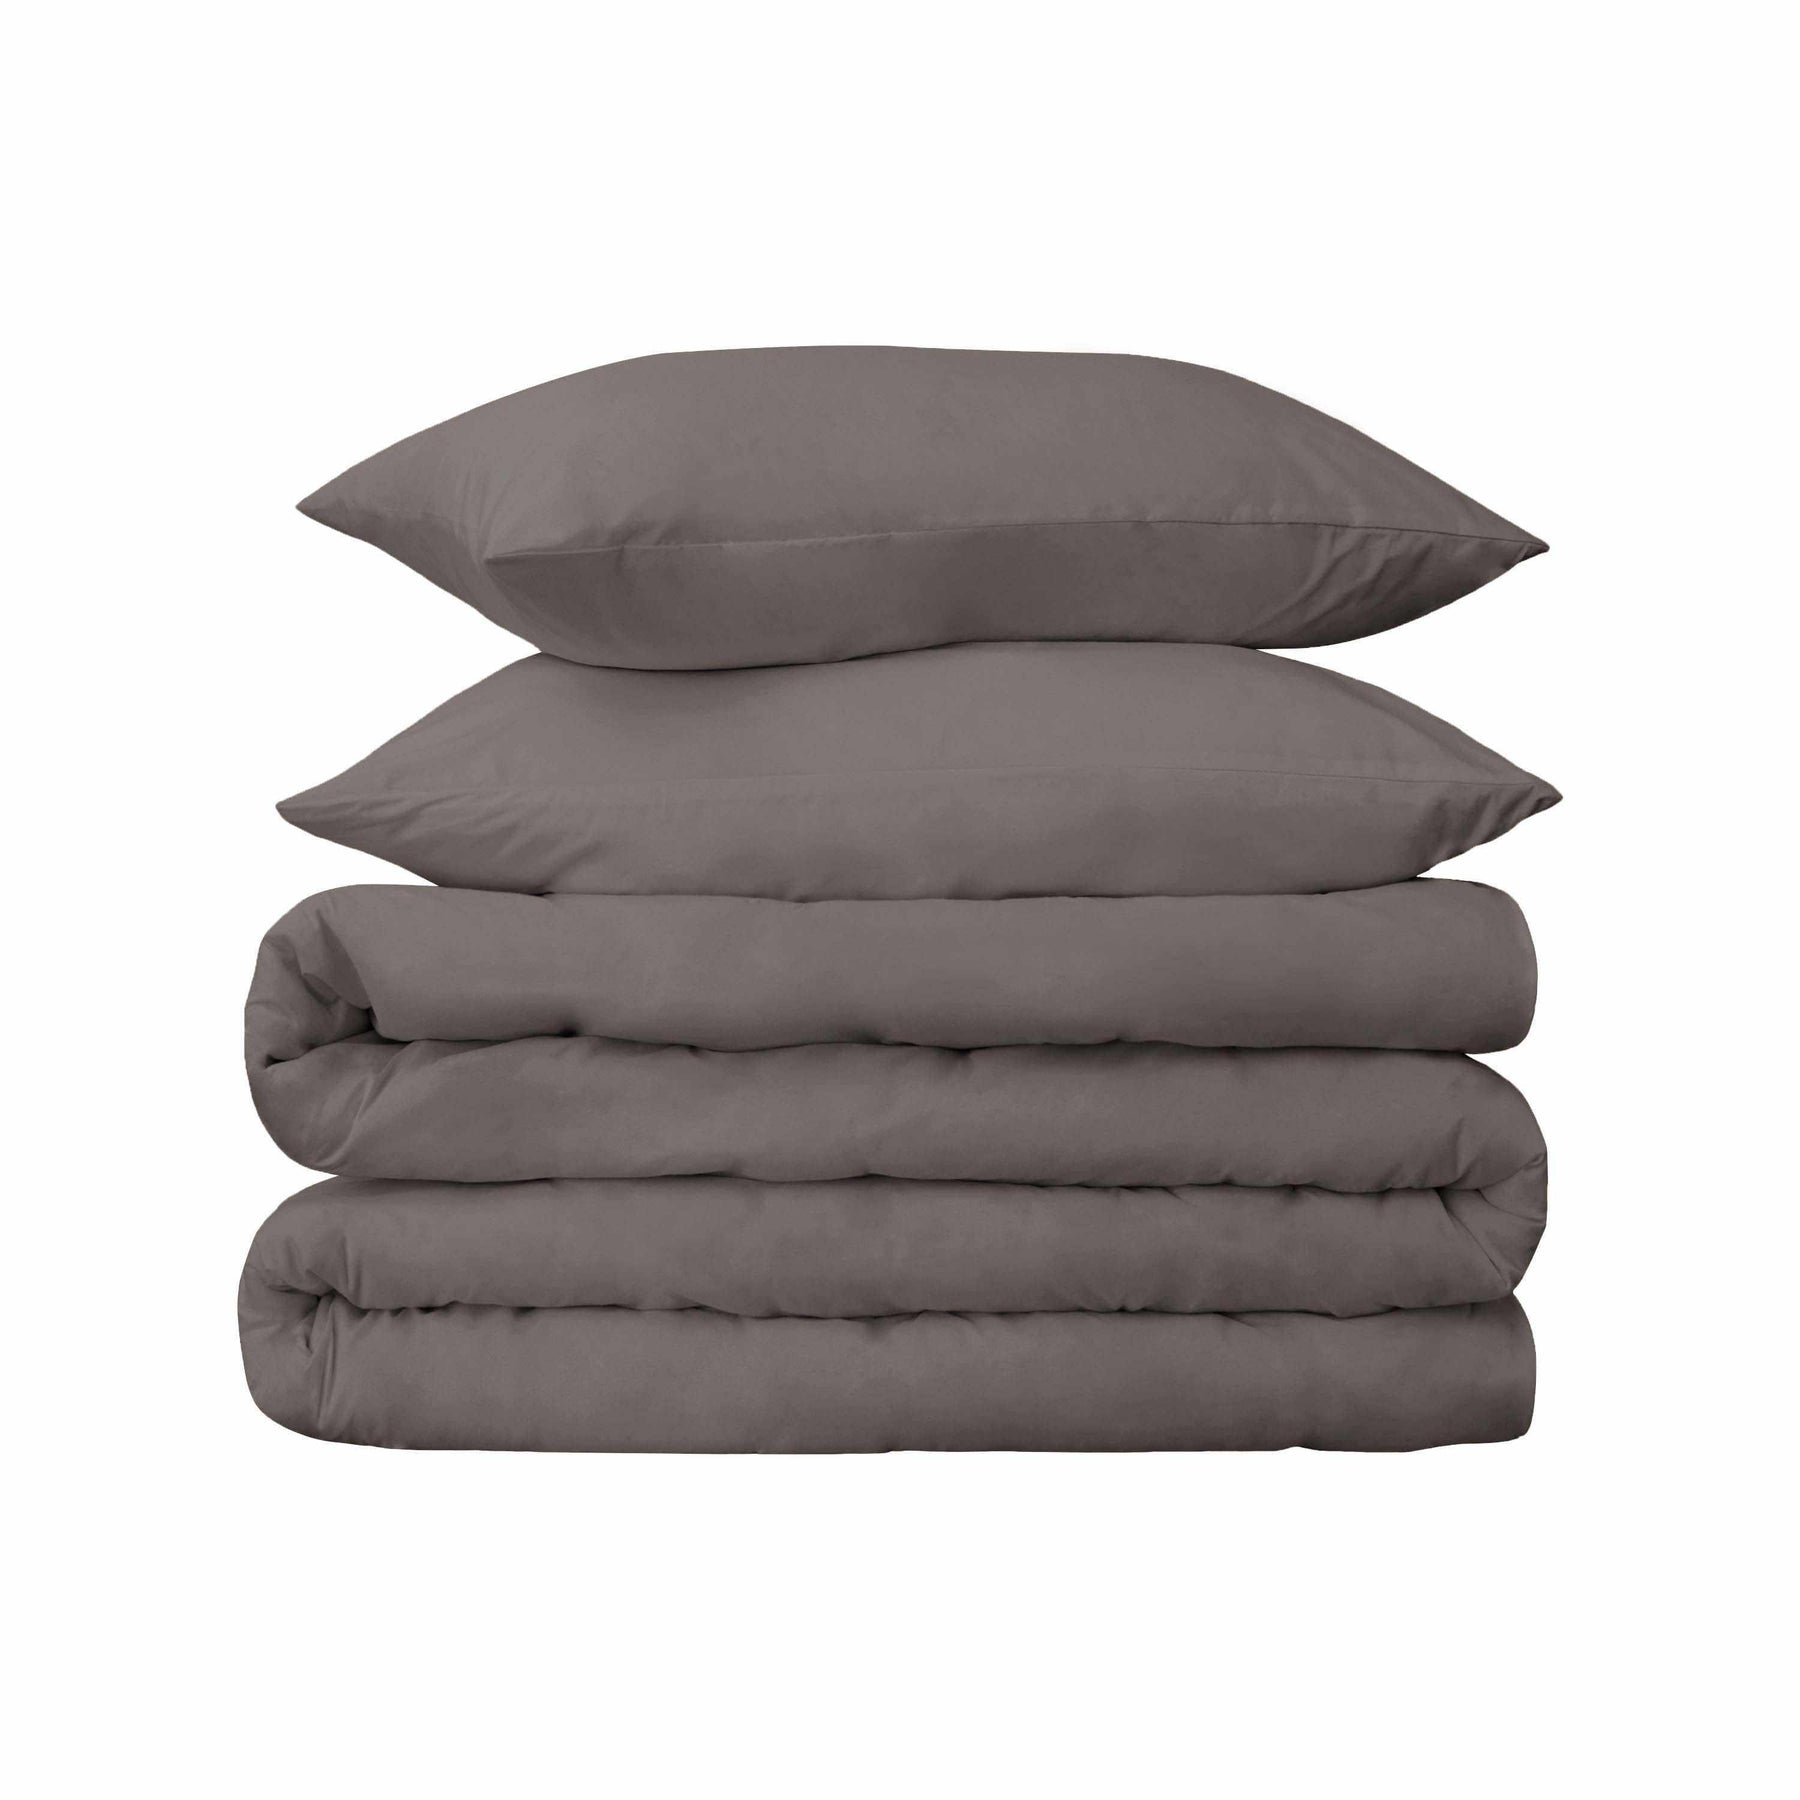  Superior Egyptian Cotton 700 Thread Count Breathable 3-Piece Duvet Cover Bedding Set - Grey